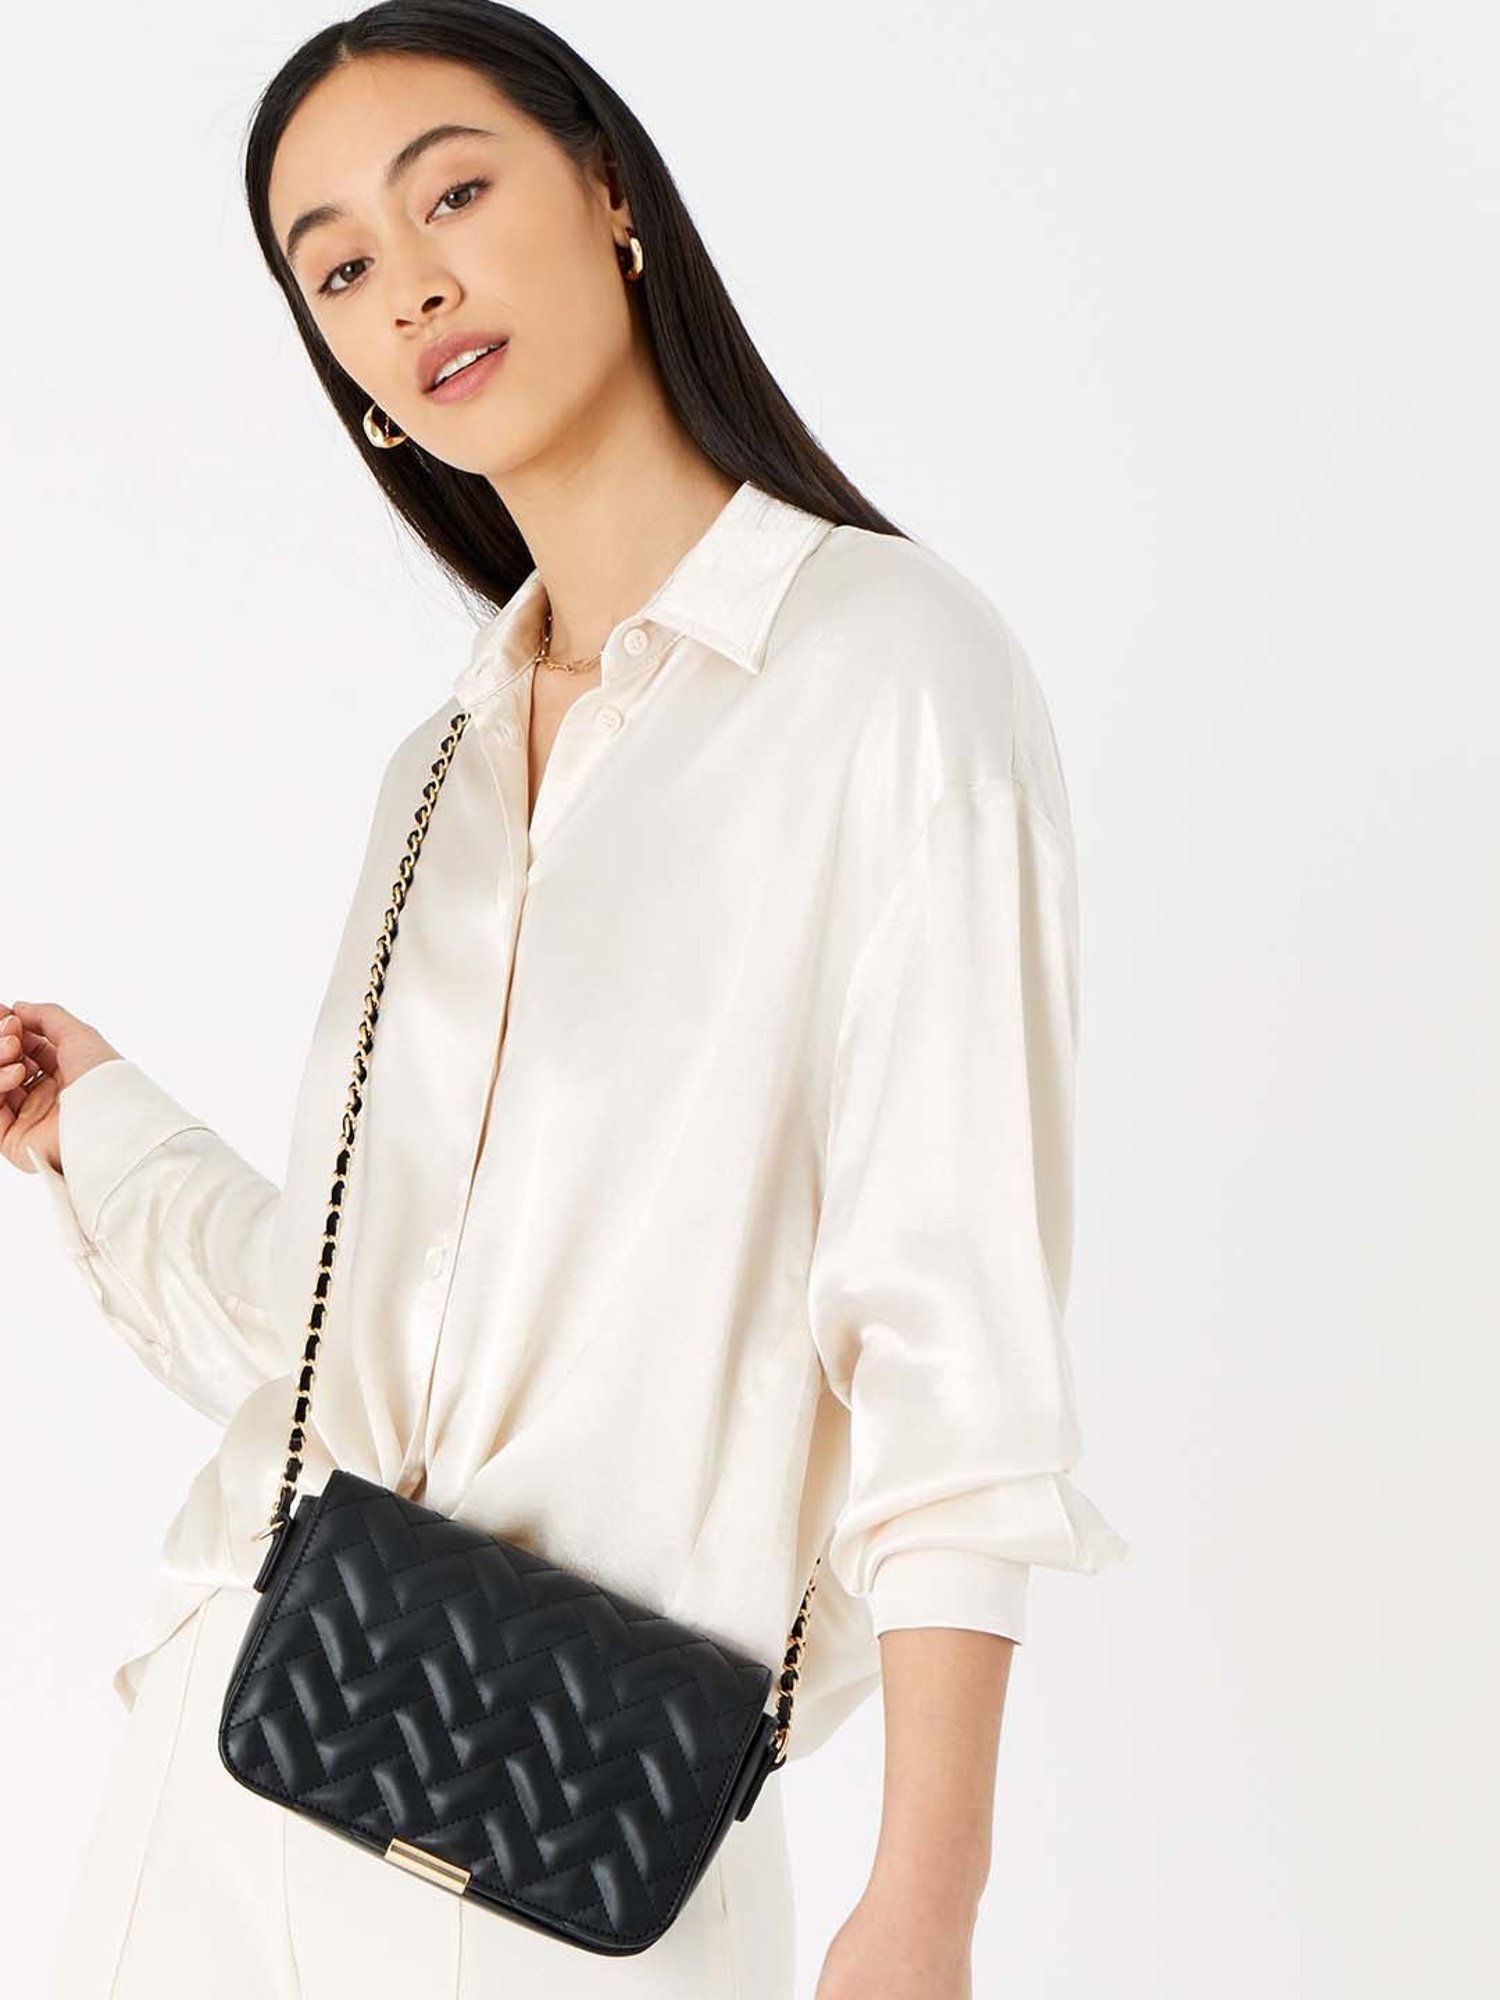 Buy Accessorize London women's Faux Leather Black Eva Quilt Shoulder Sling  bag at